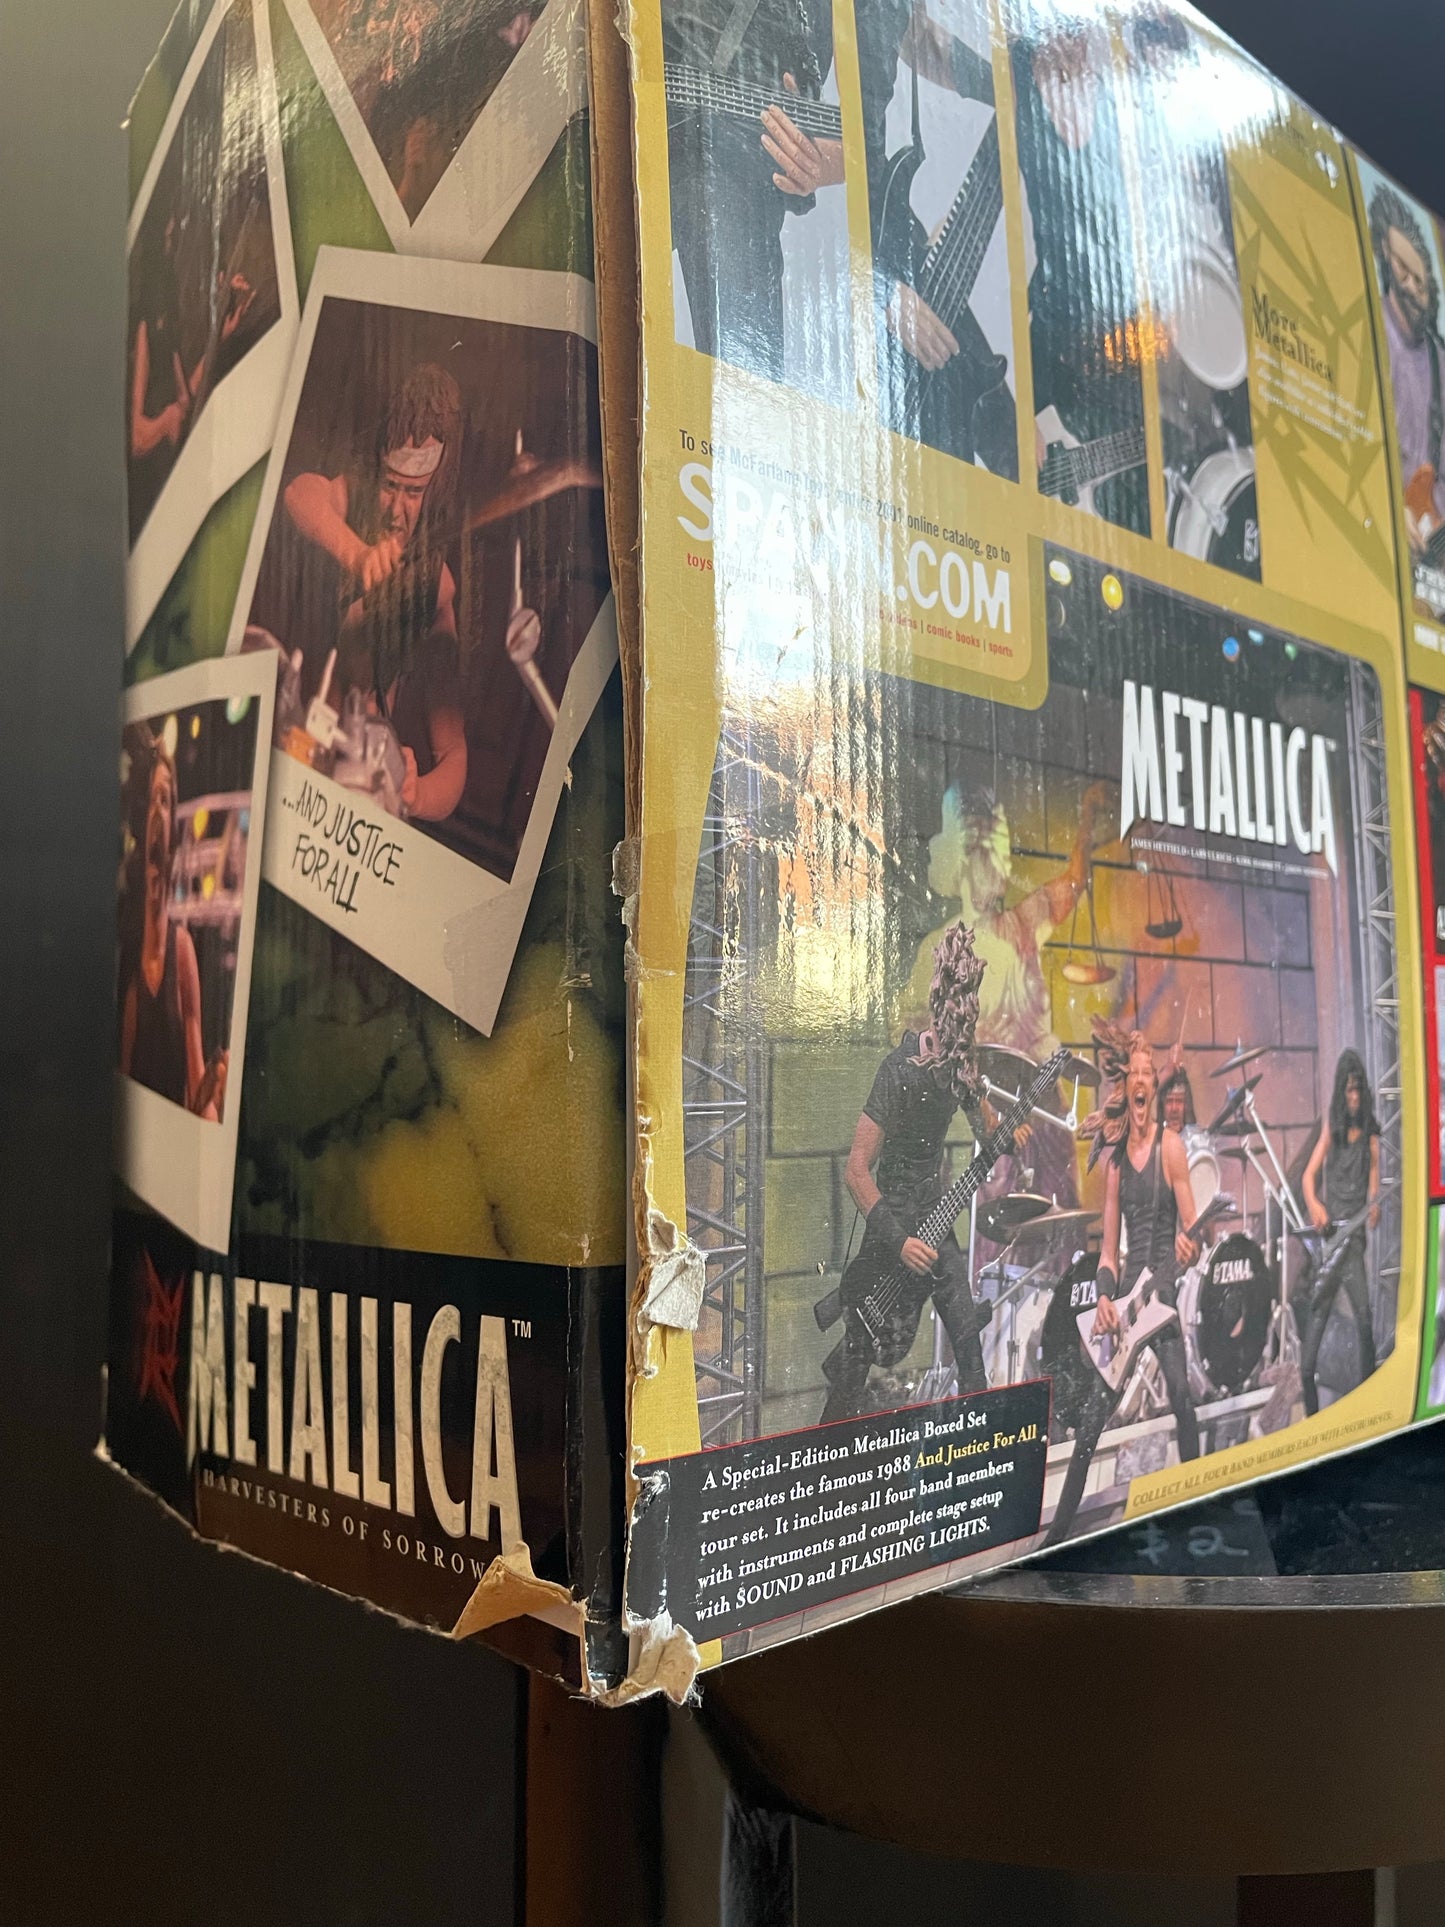 Vintage Metallica Harvester of Sorrow McFarlane Toys Full Band Box Set Figures